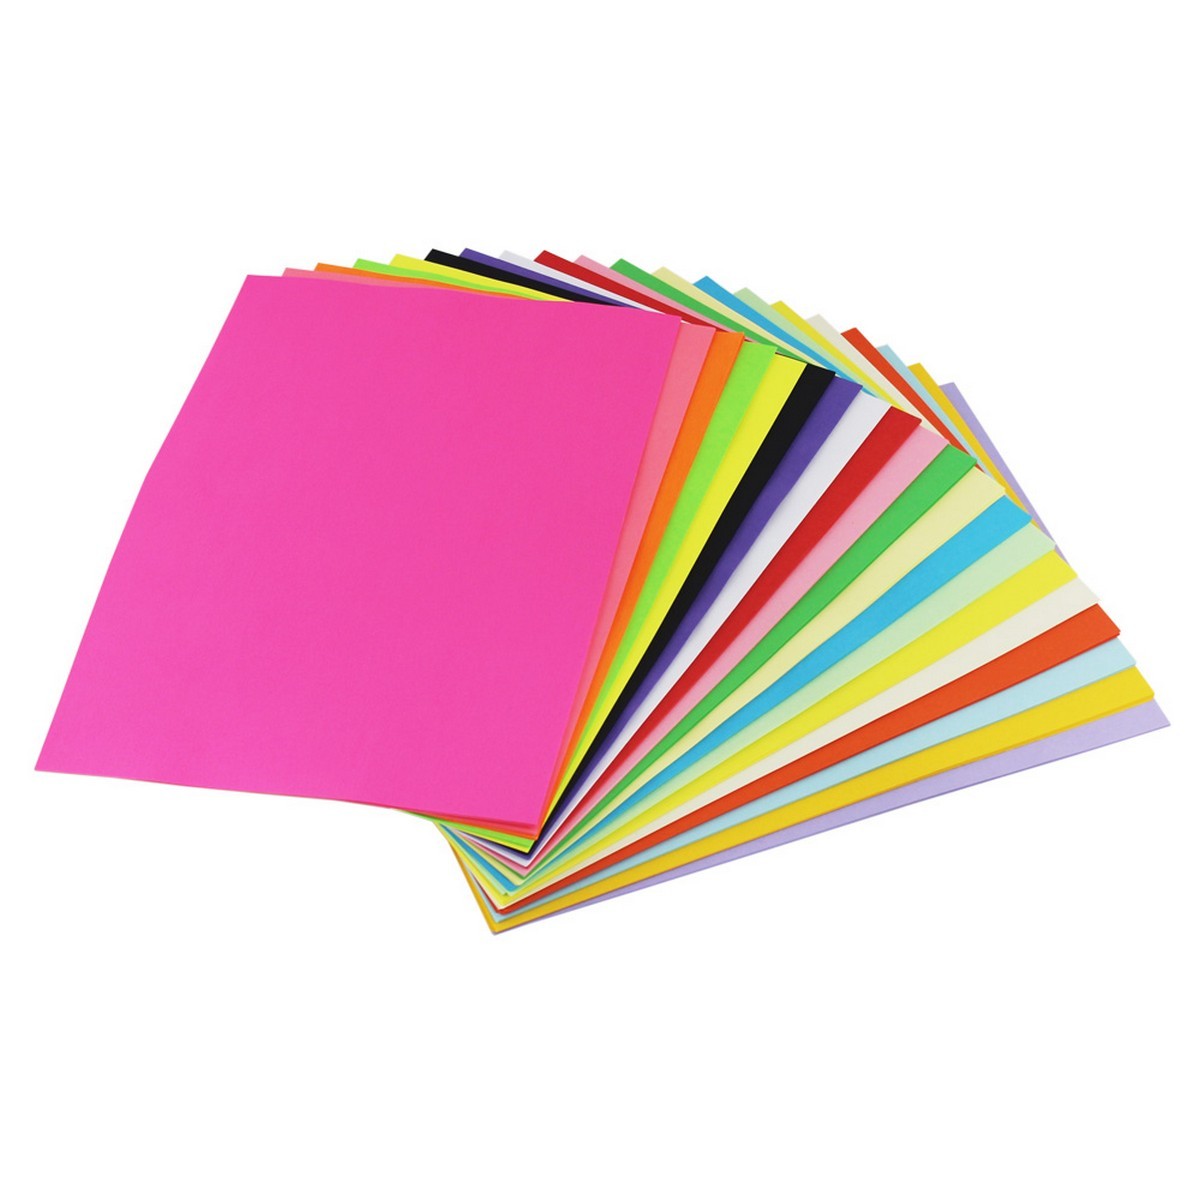 Color Printing Paper A4 Size 500 sheets Mix Colors